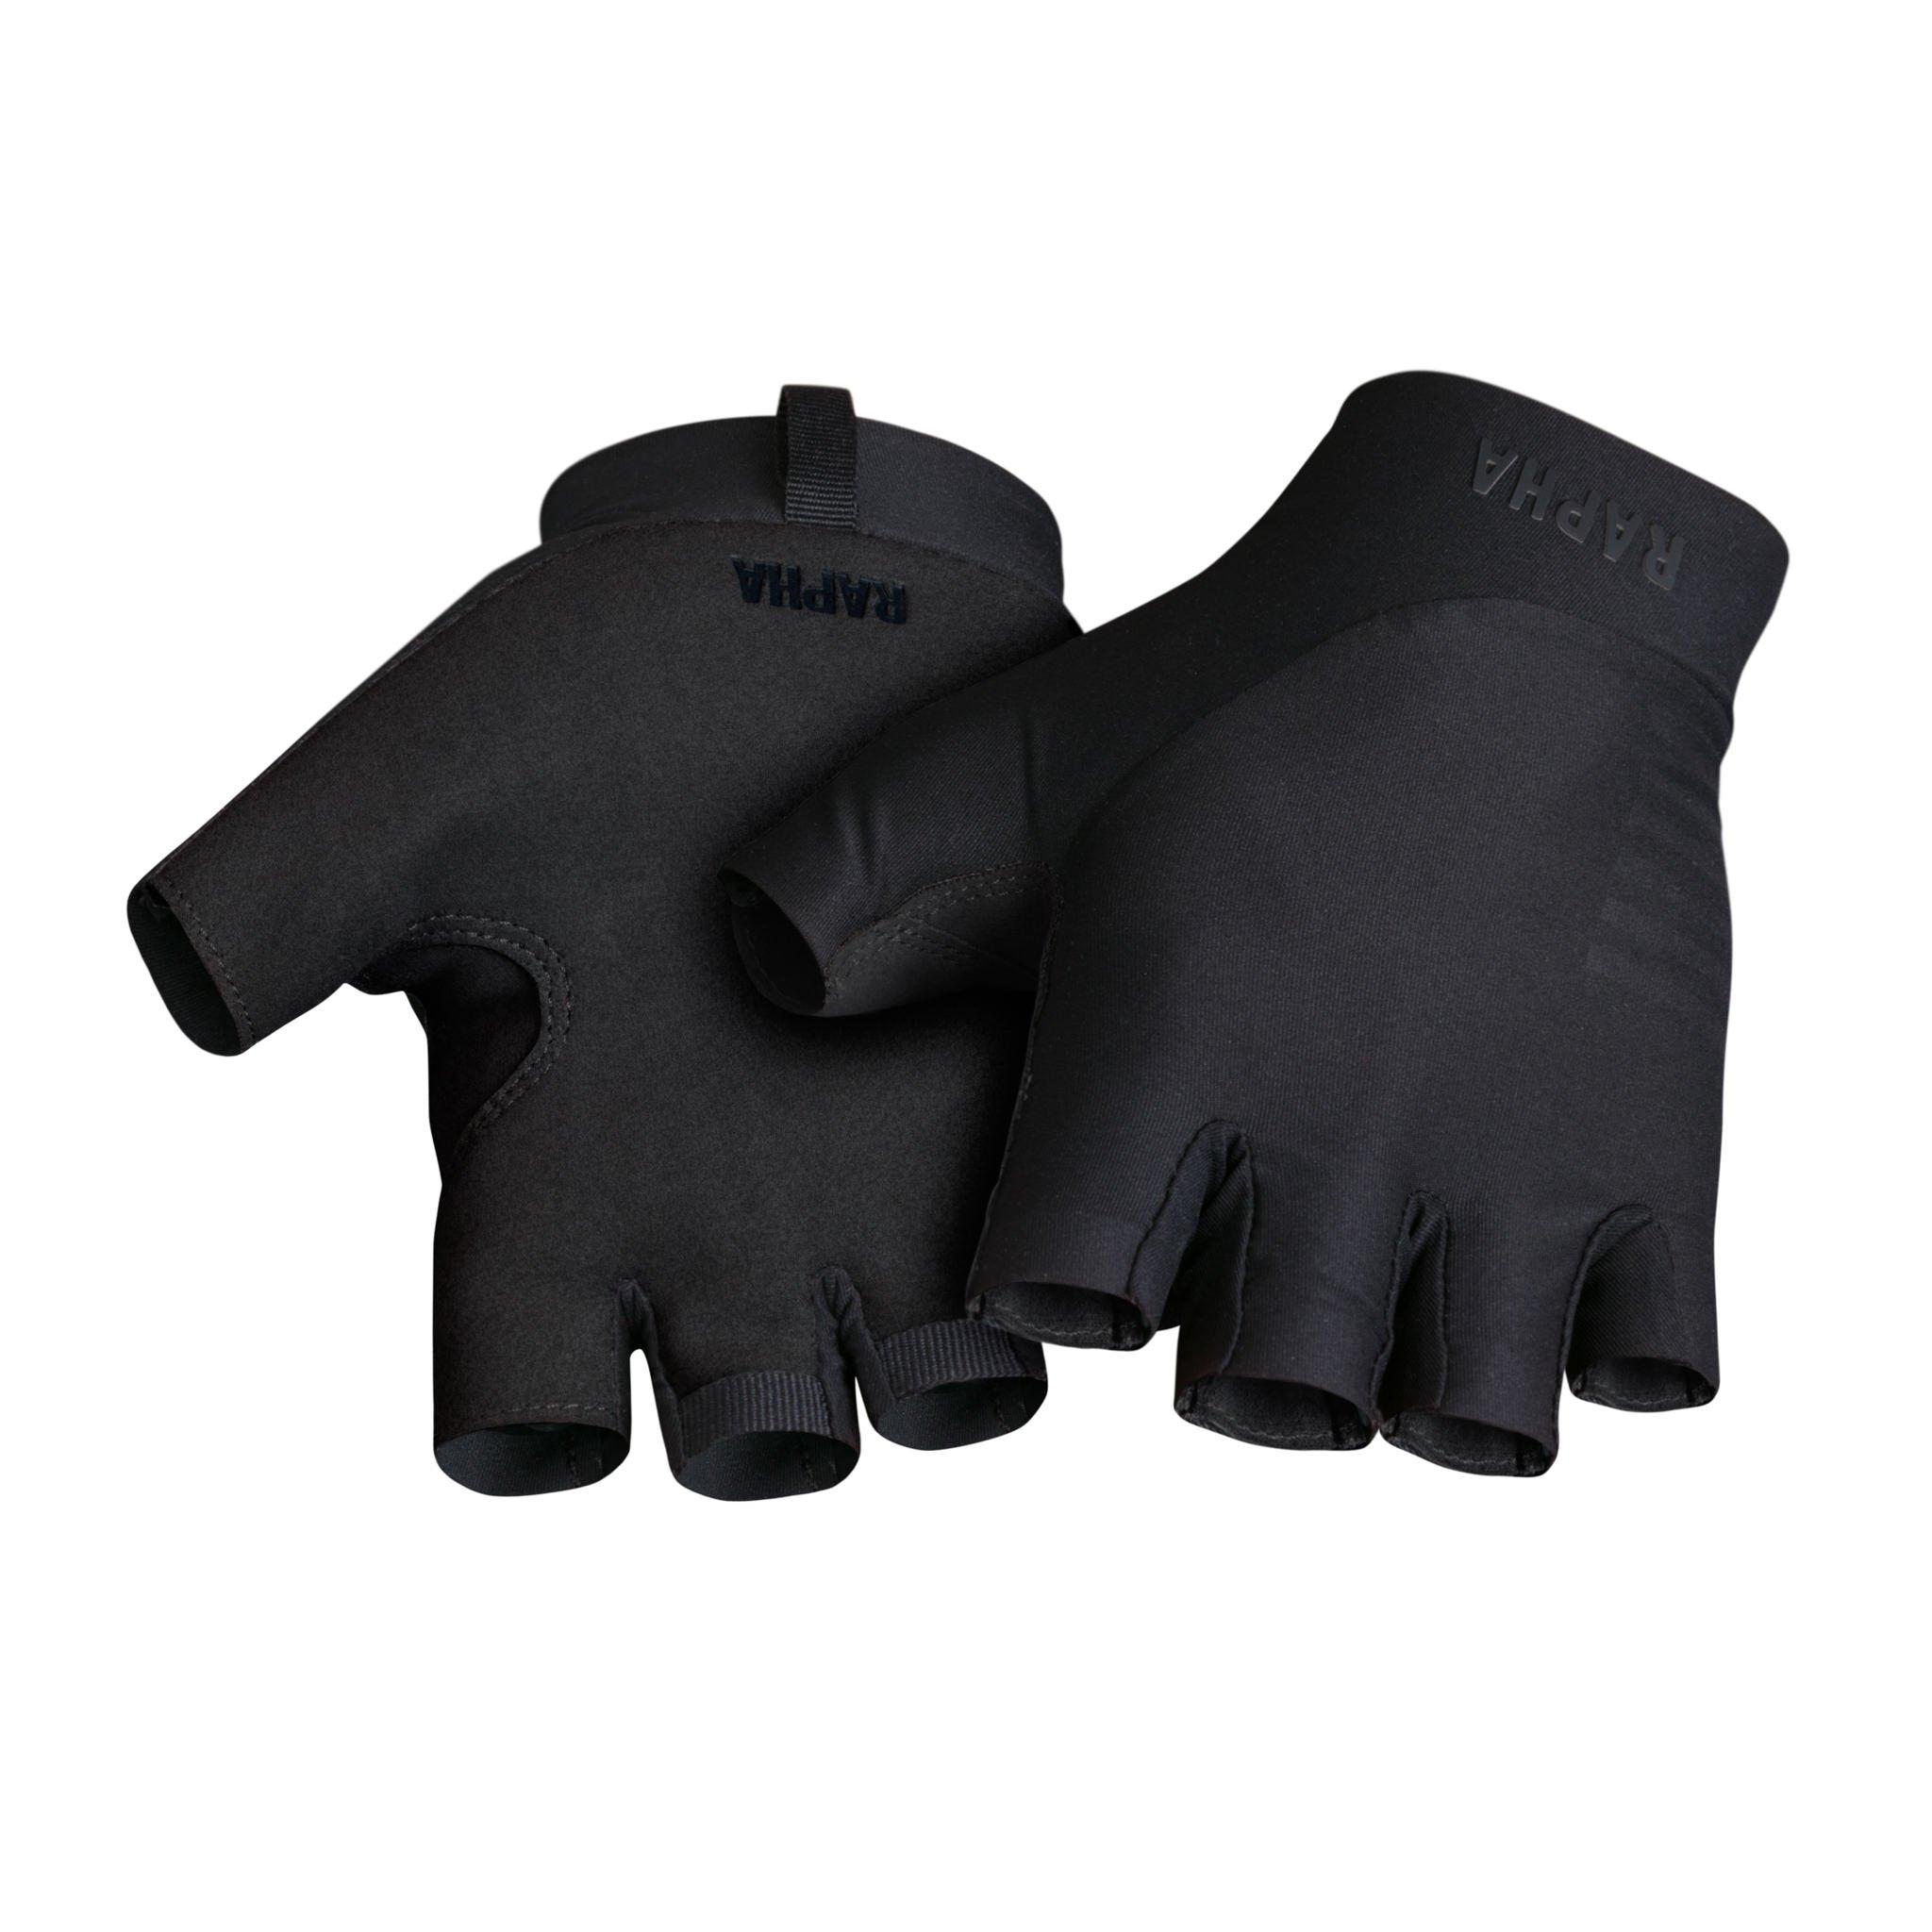 Rapha Merino Gloves - Black/Carbon Grey - Small